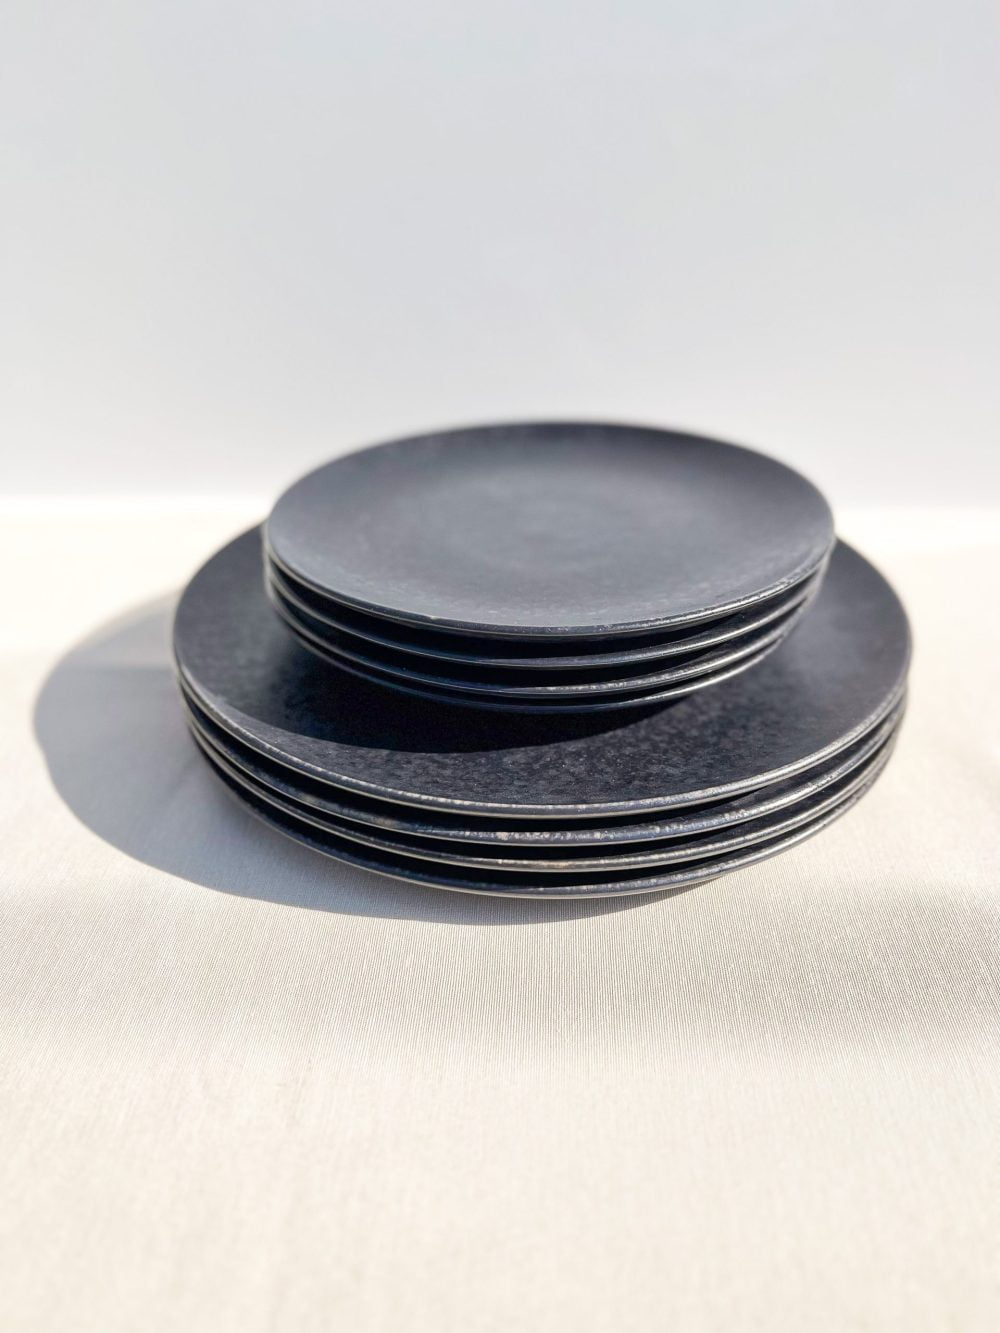 black tableware set plates - black stone -handmade ceramics - modern portuguese tableware at UNRO